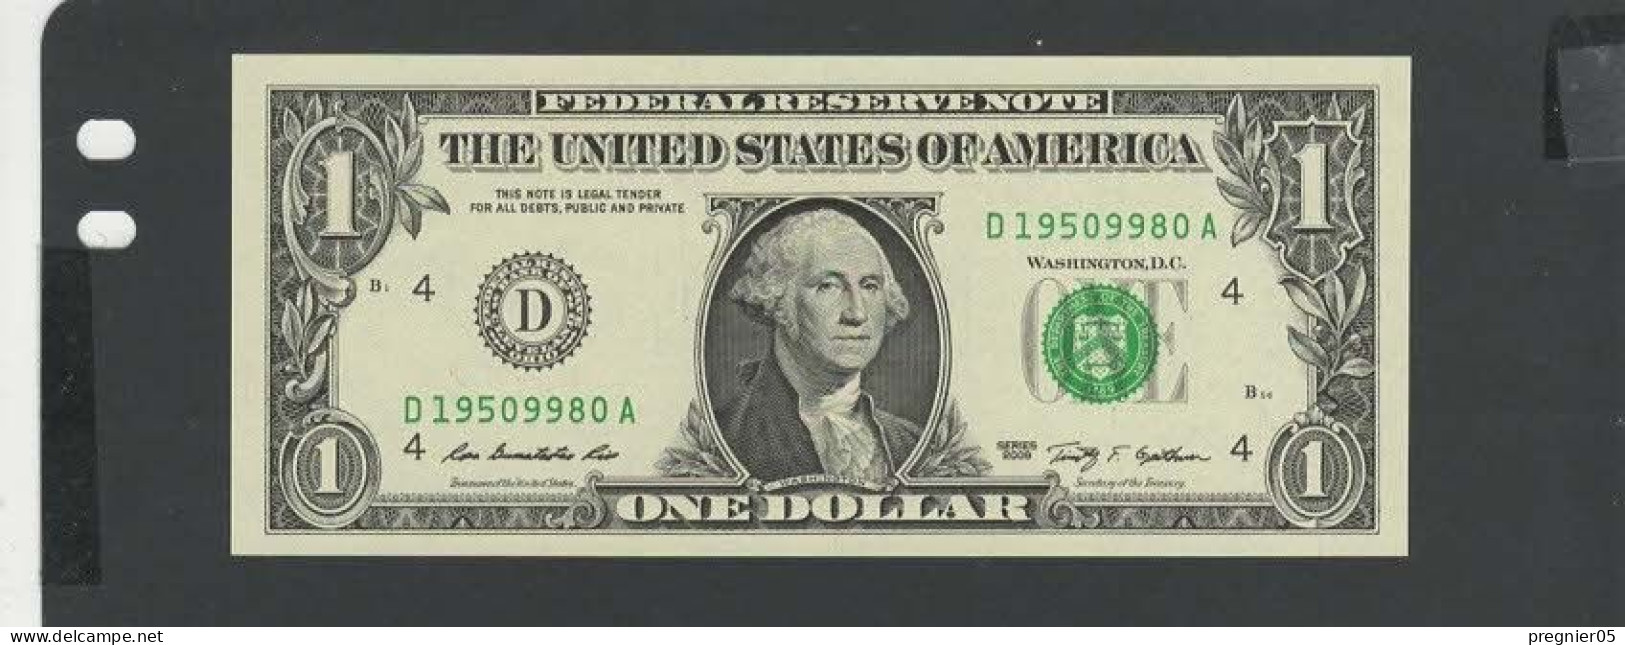 USA - Billet 1 Dollar 2009 NEUF/UNC P.529 § D - Federal Reserve (1928-...)